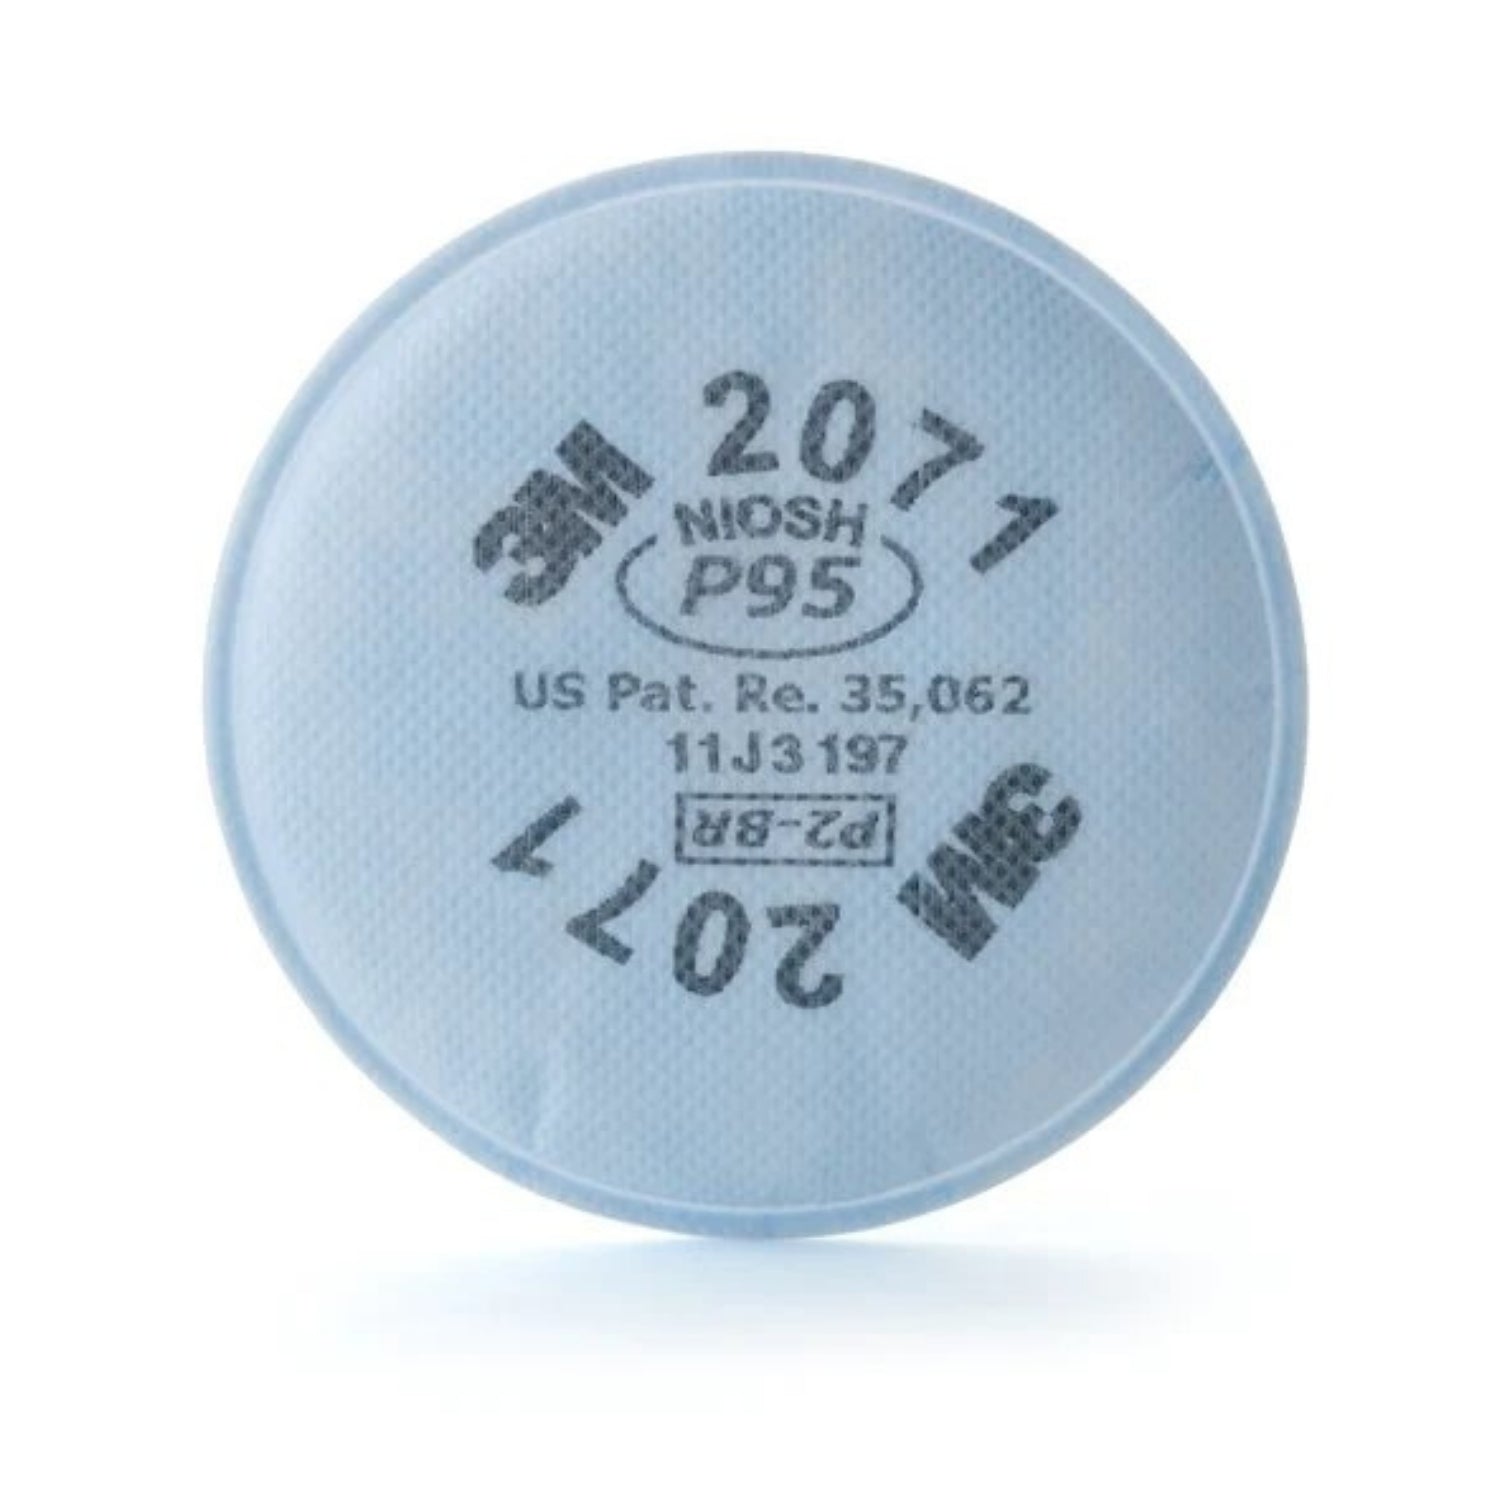 3M™ Particulate Filter 2071, P95 - Solids/Liquids/Oil Based Part/Metal Fumes